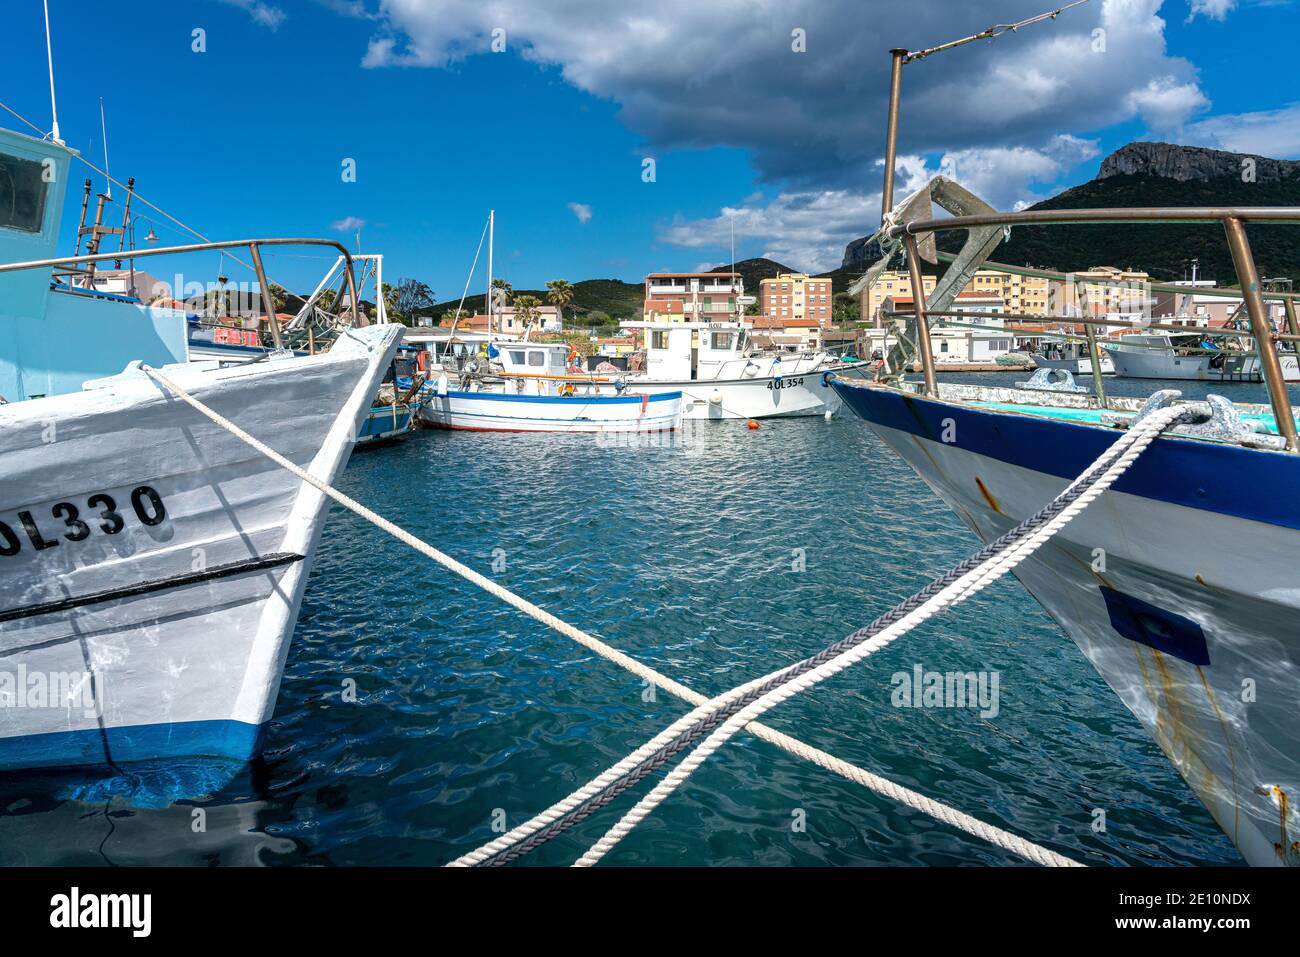 Fishing Boats In The Port Of Figari On The Golfo Aranci In Sardinia, Italy  Stock Photo - Alamy